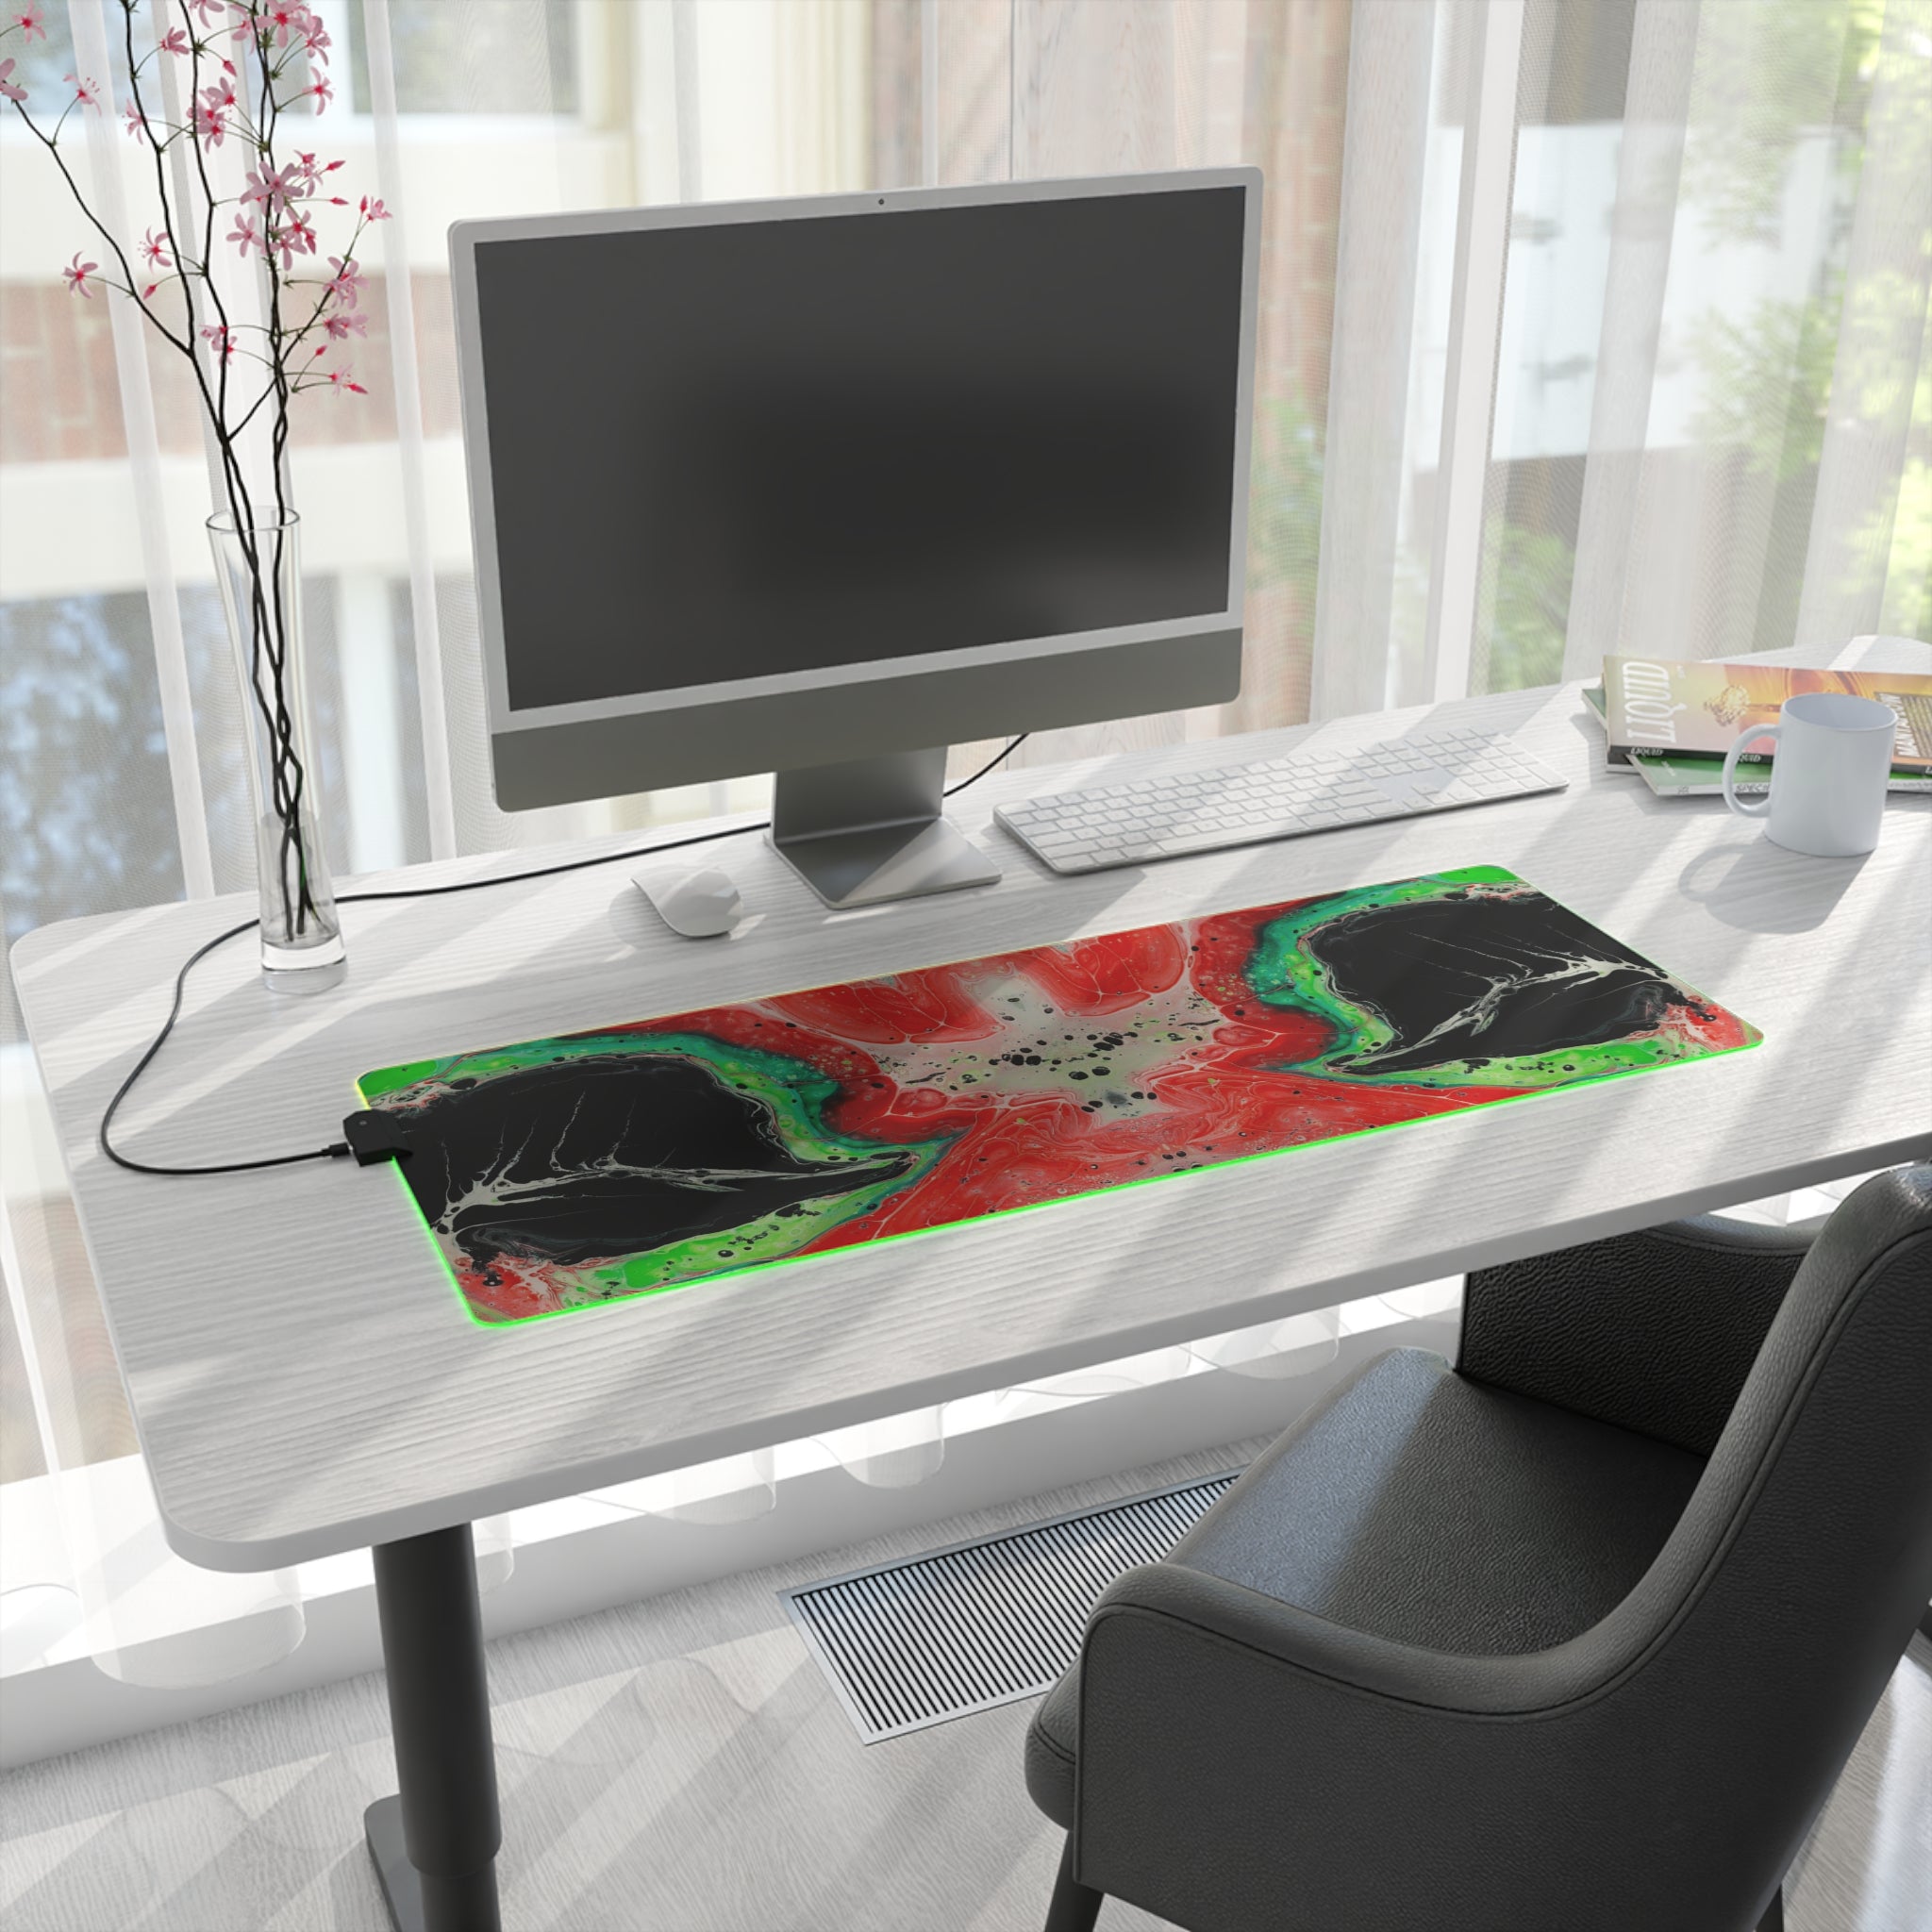 Cameron Creations - LED Gaming Mouse Pad - Portal Block - 31"x11"